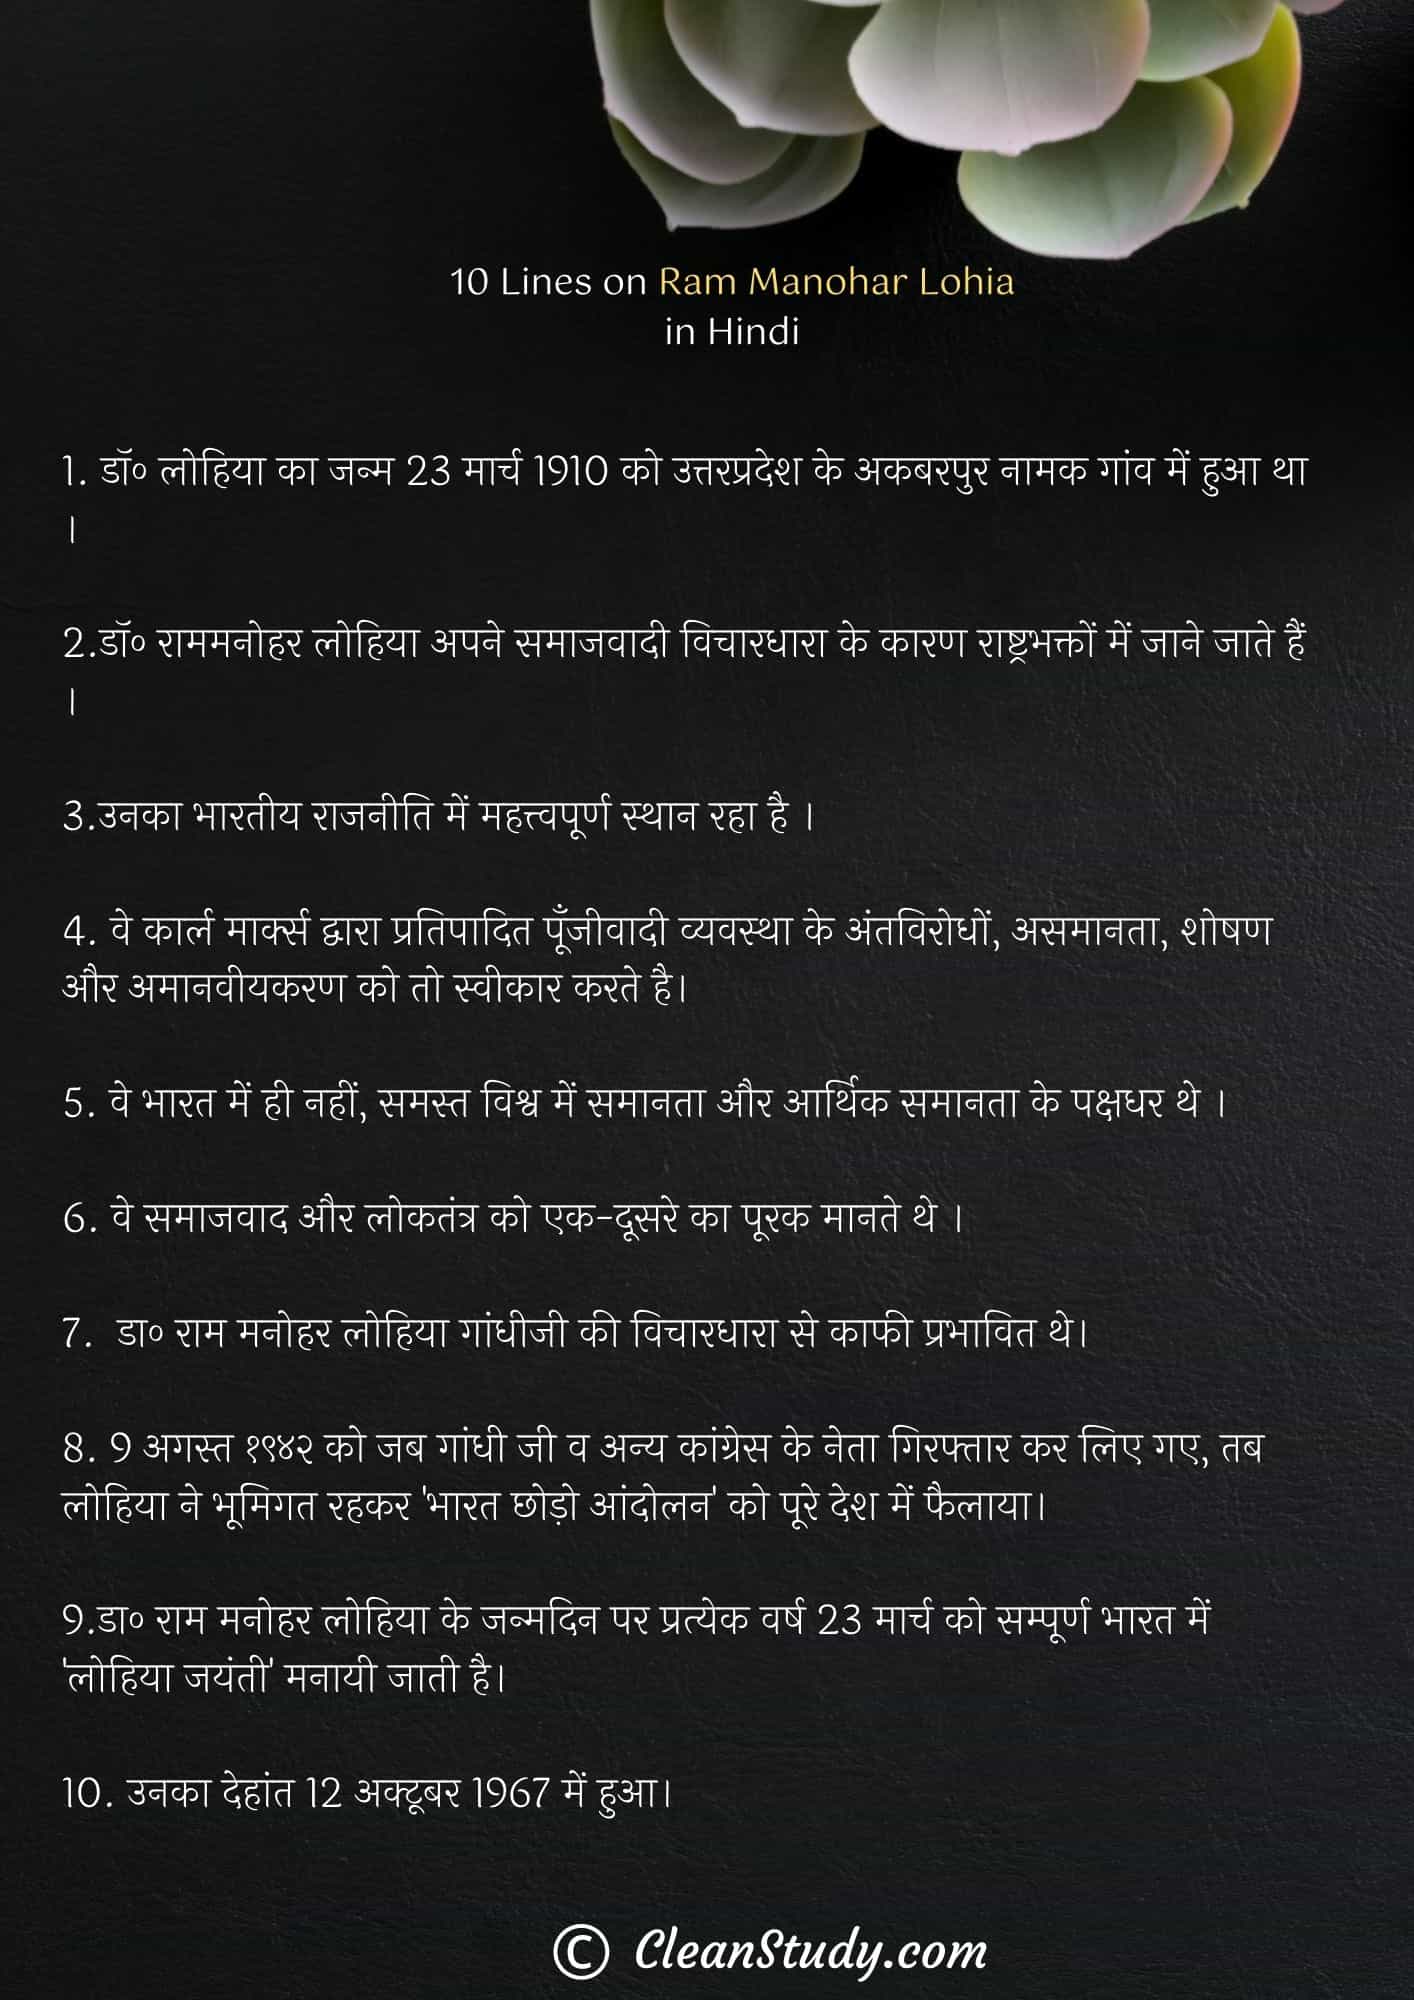 10 Lines on Ram Manohar Lohia in Hindi